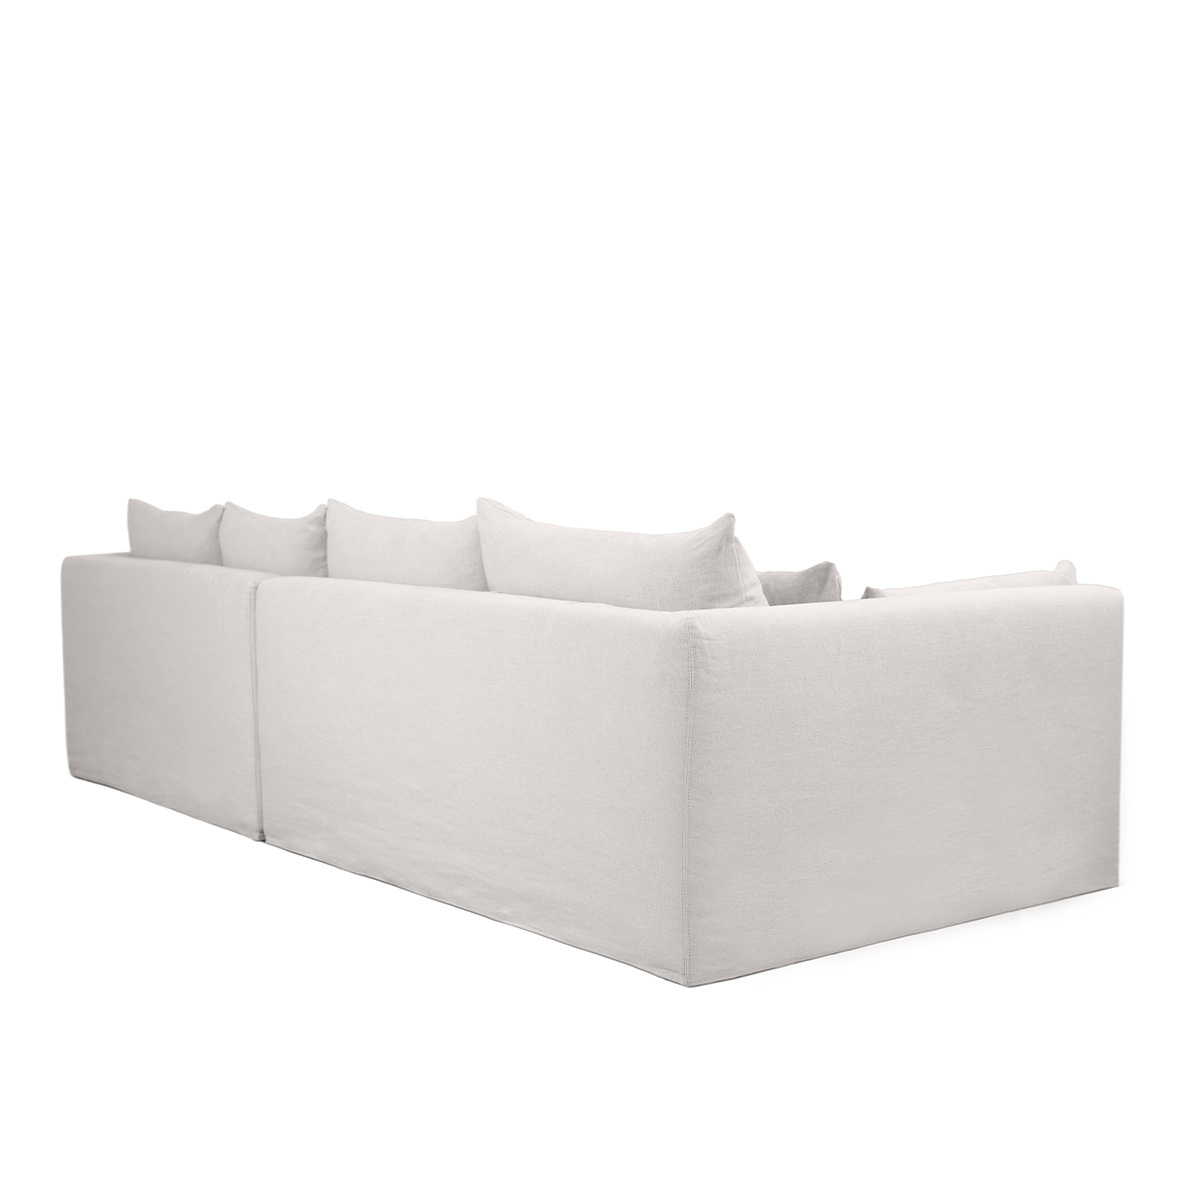 SuperBox corner sofa - Right angle, L300 x P180 x H85 cm - Linen - image 4